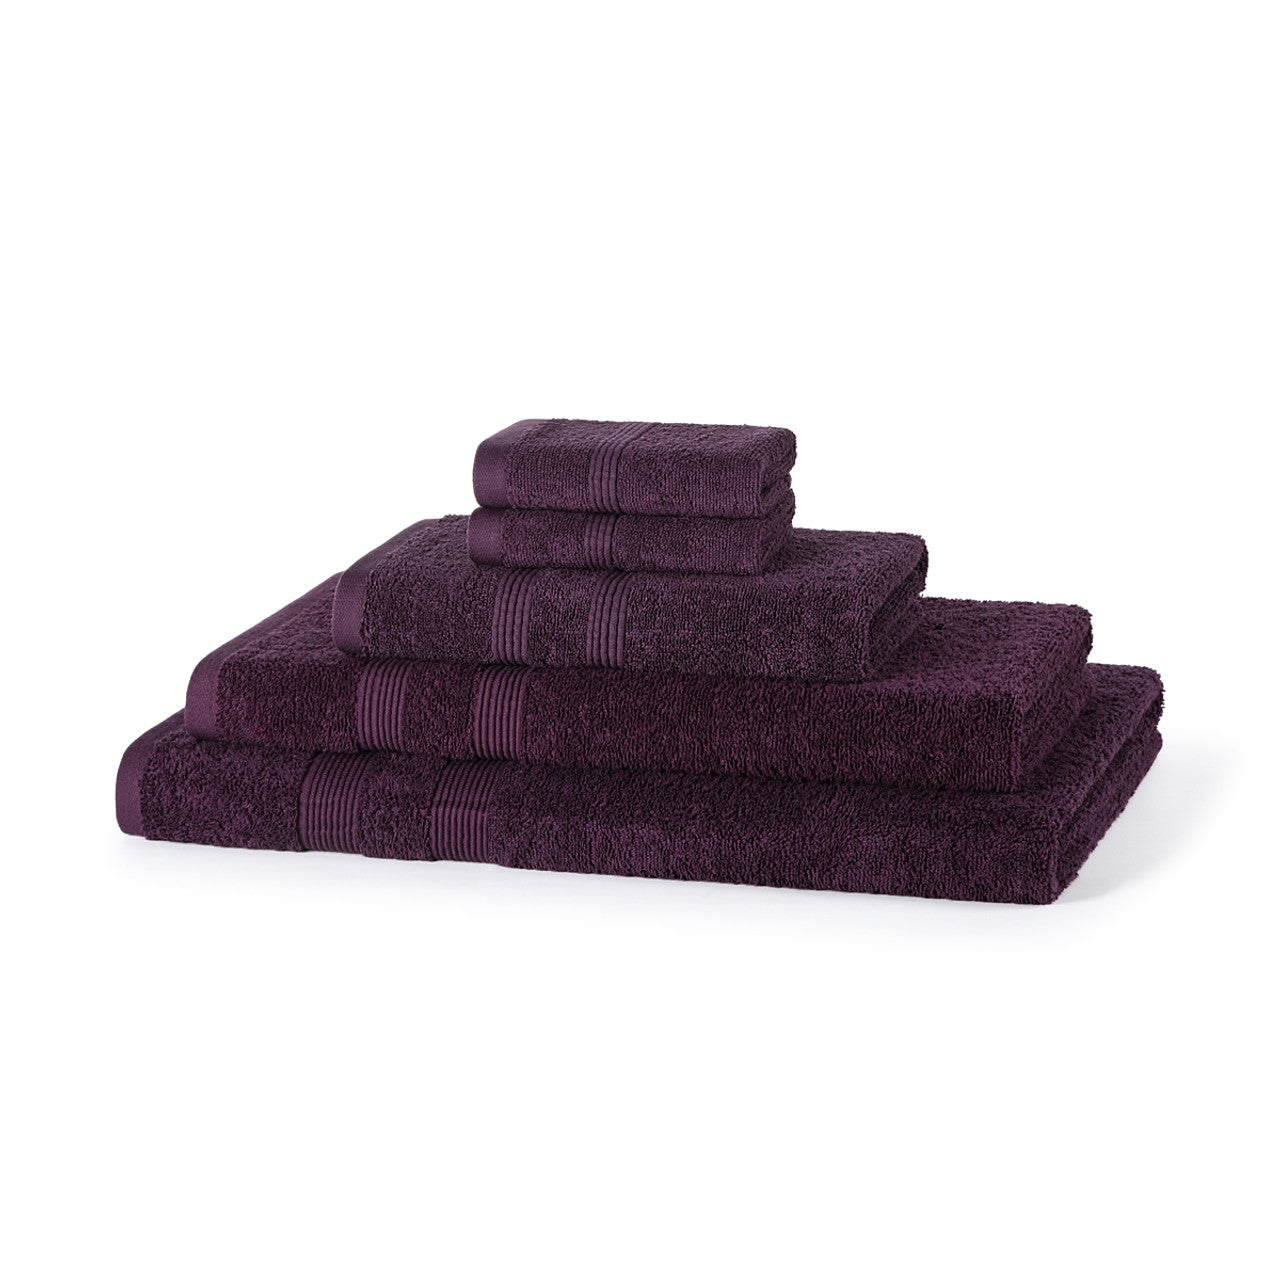 Egyptian Cotton 5 Piece Bale Set 500GSM - 2 Face Cloths, 1 Hand Towel, 1 Bath Towel, 1 Bath Sheet